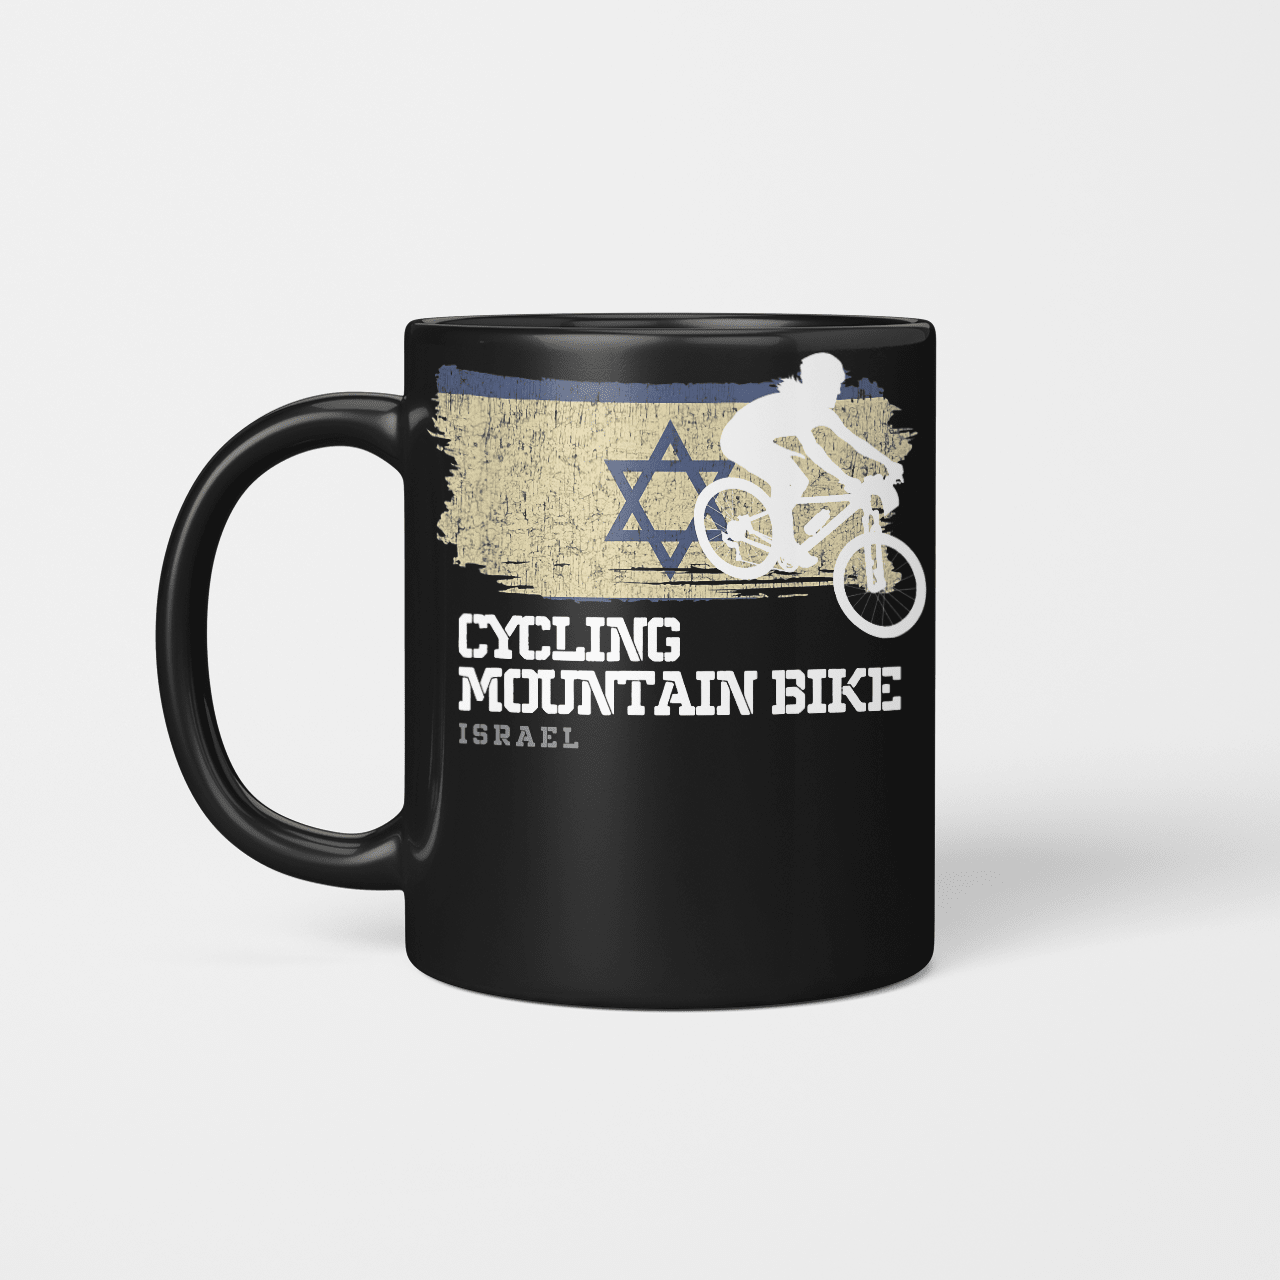 Cycling Mountain Bike Israel Cyl2324